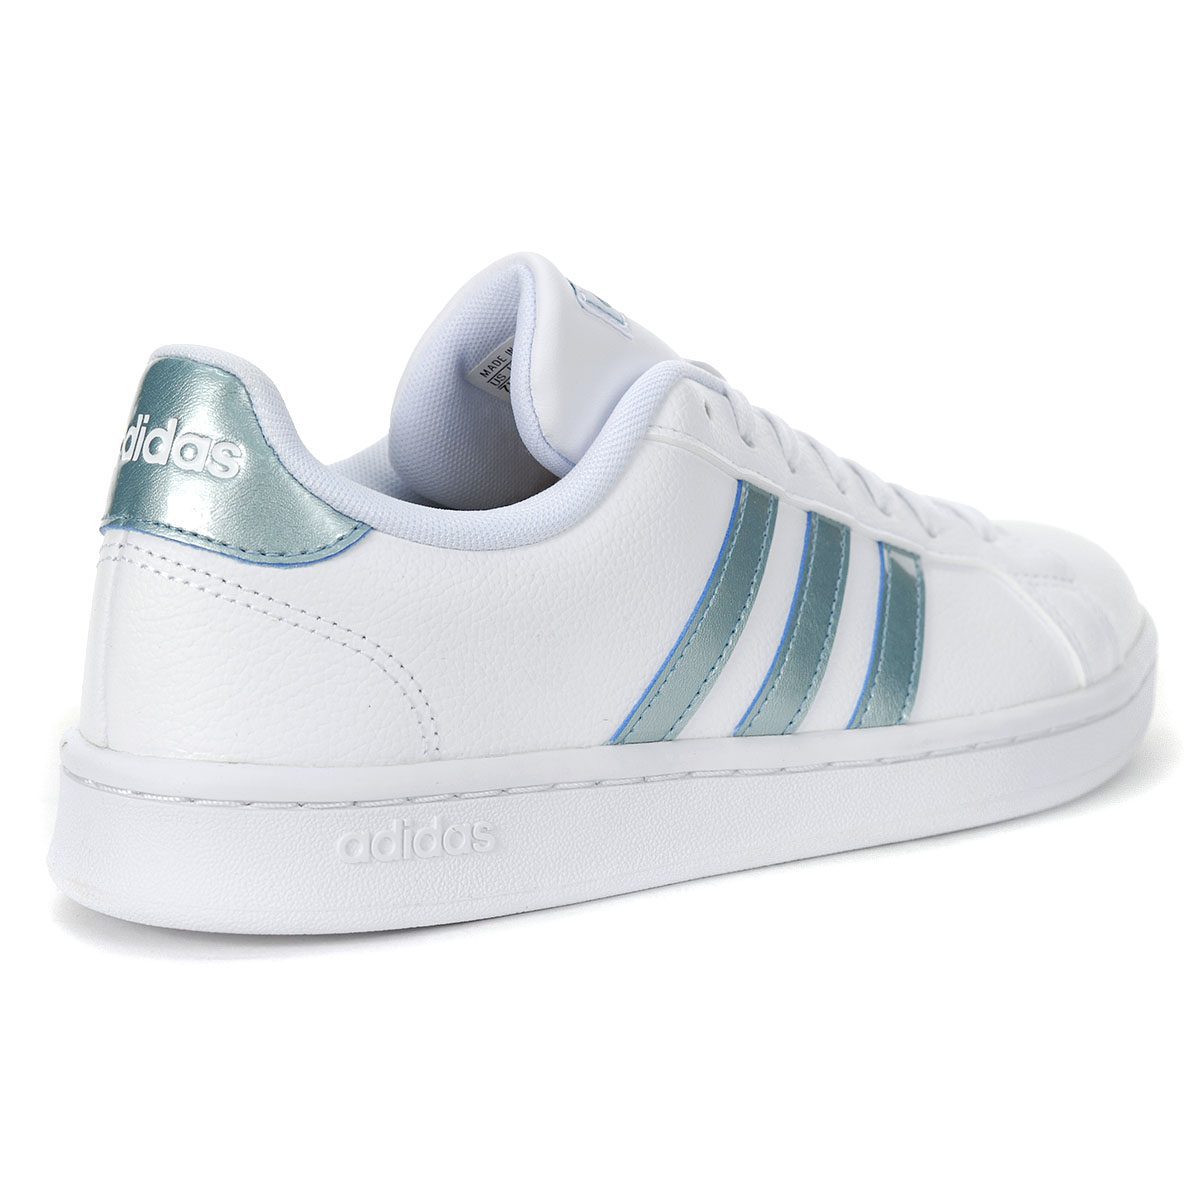 Adidas Women #39 s Grand Court White/Ash Grey/Light Granite Sneakers EE8175